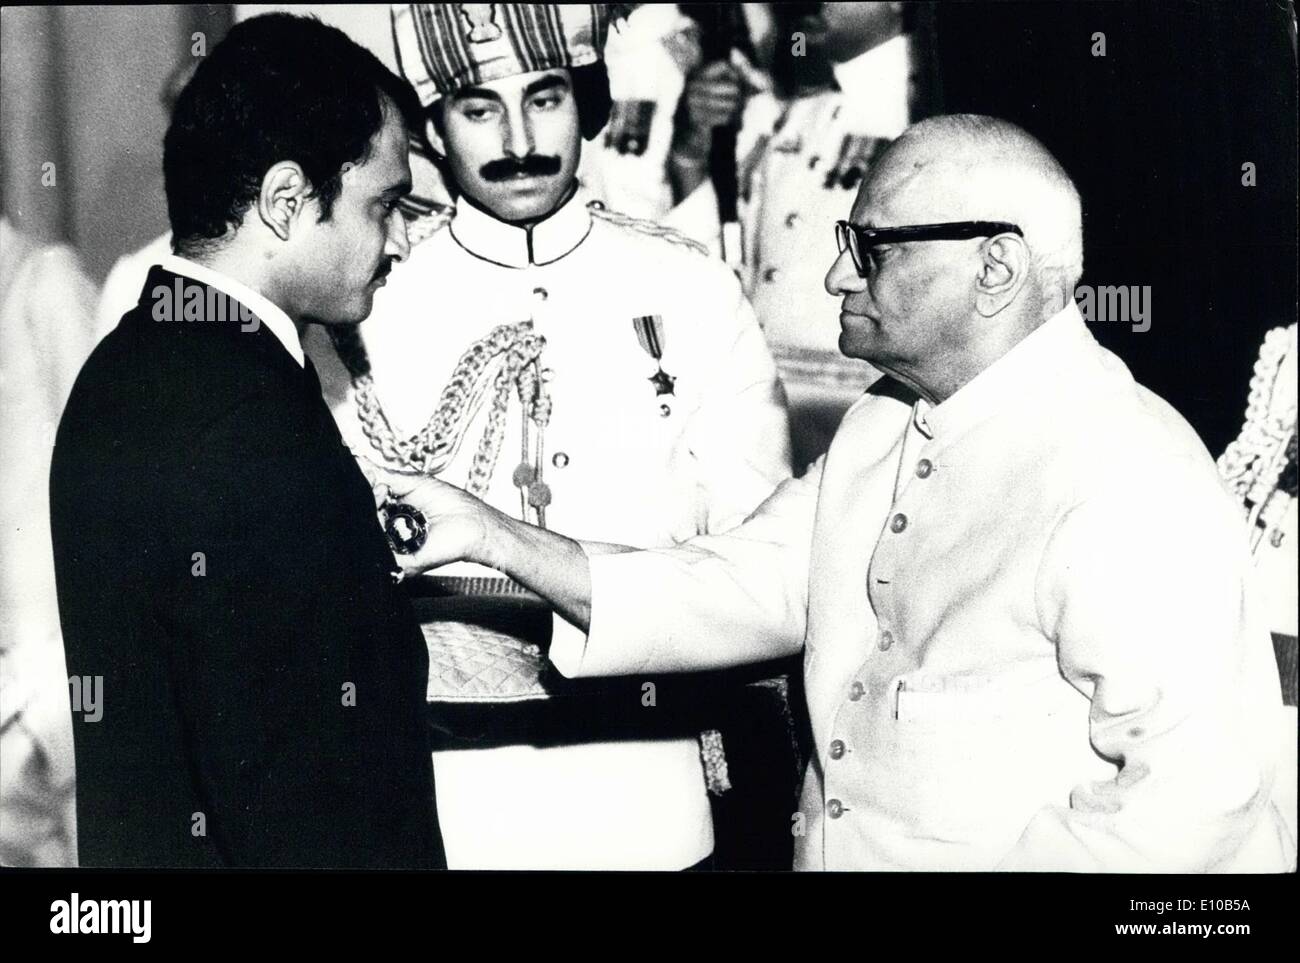 Mar. 03, 1972 - Ajit Laxman Wadekar, éminent cricketer prix Padma Shri recevant du Président V.V.Giri à l'investiture civile tenue au palais présidentiel à New Delhi le 25 mars. 1972. Banque D'Images